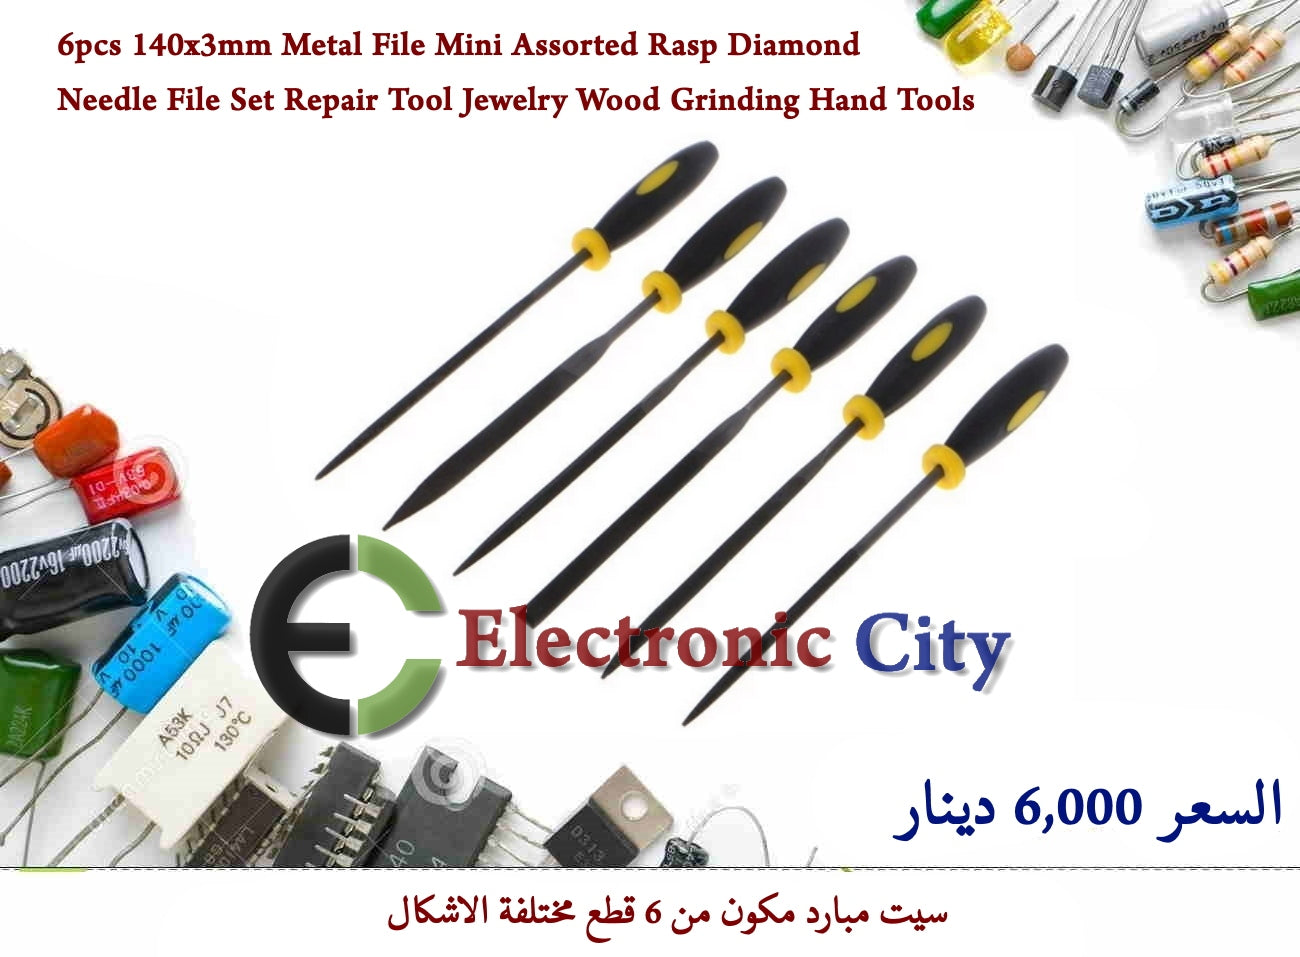 6pcs 140x3mm Metal File Mini Assorted Rasp Diamond Needle File Set Repair Tool Jewelry Wood Grinding Hand Tools #C6 X-JL0021A